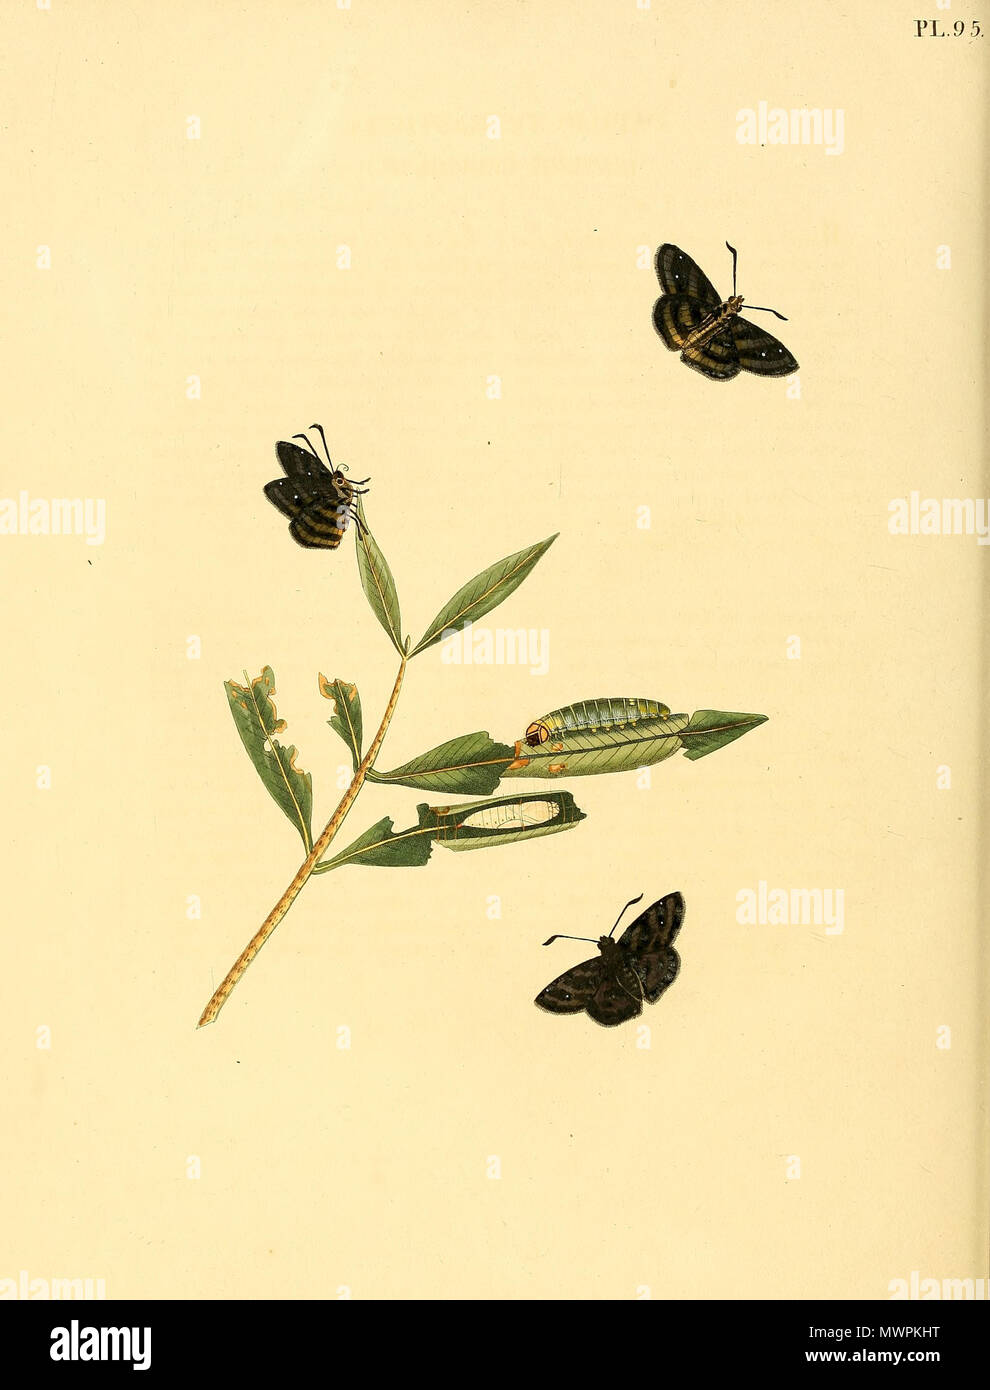 . Illustration of: unidentified butterfly, described as Papilio tetrastigma . circa 1850. Jan Sepp (1778 - 1853) 552 Sepp-Surinaamsche vlinders - pl 095 plate descr as Papilio tetrastigma Stock Photo